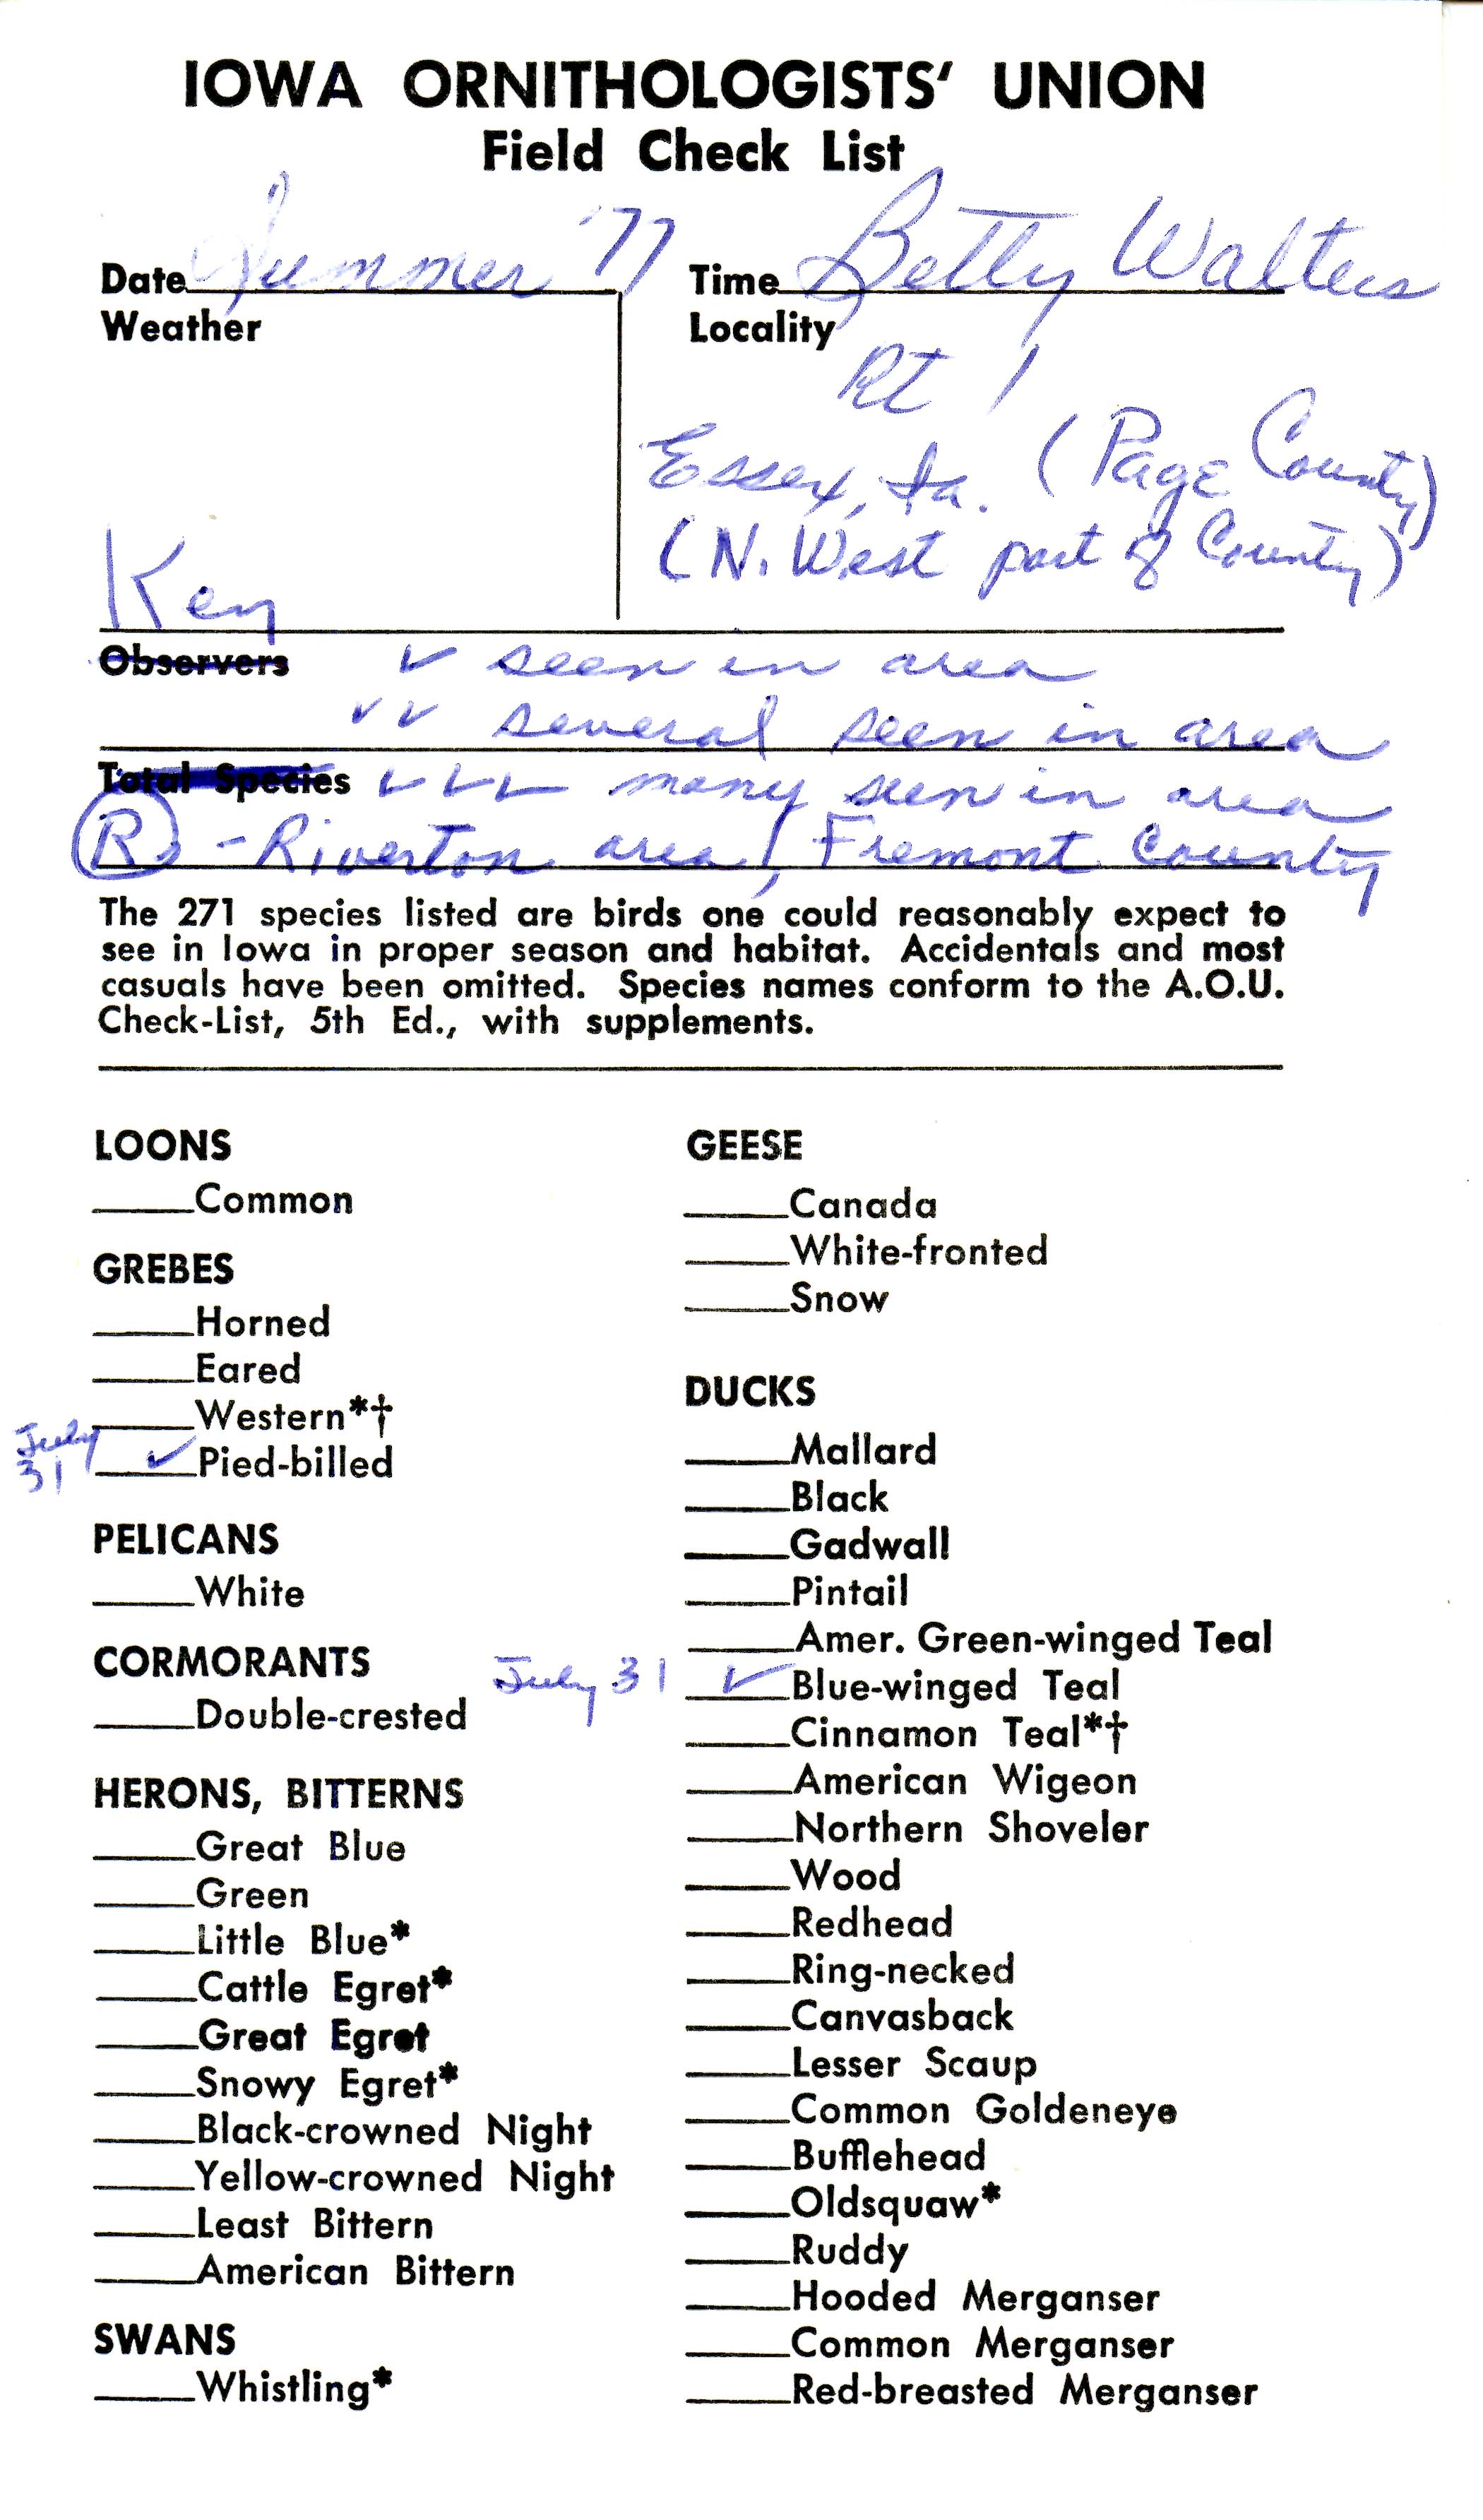 Iowa Ornithologists' Union field check list, Betty Walters, summer 1977